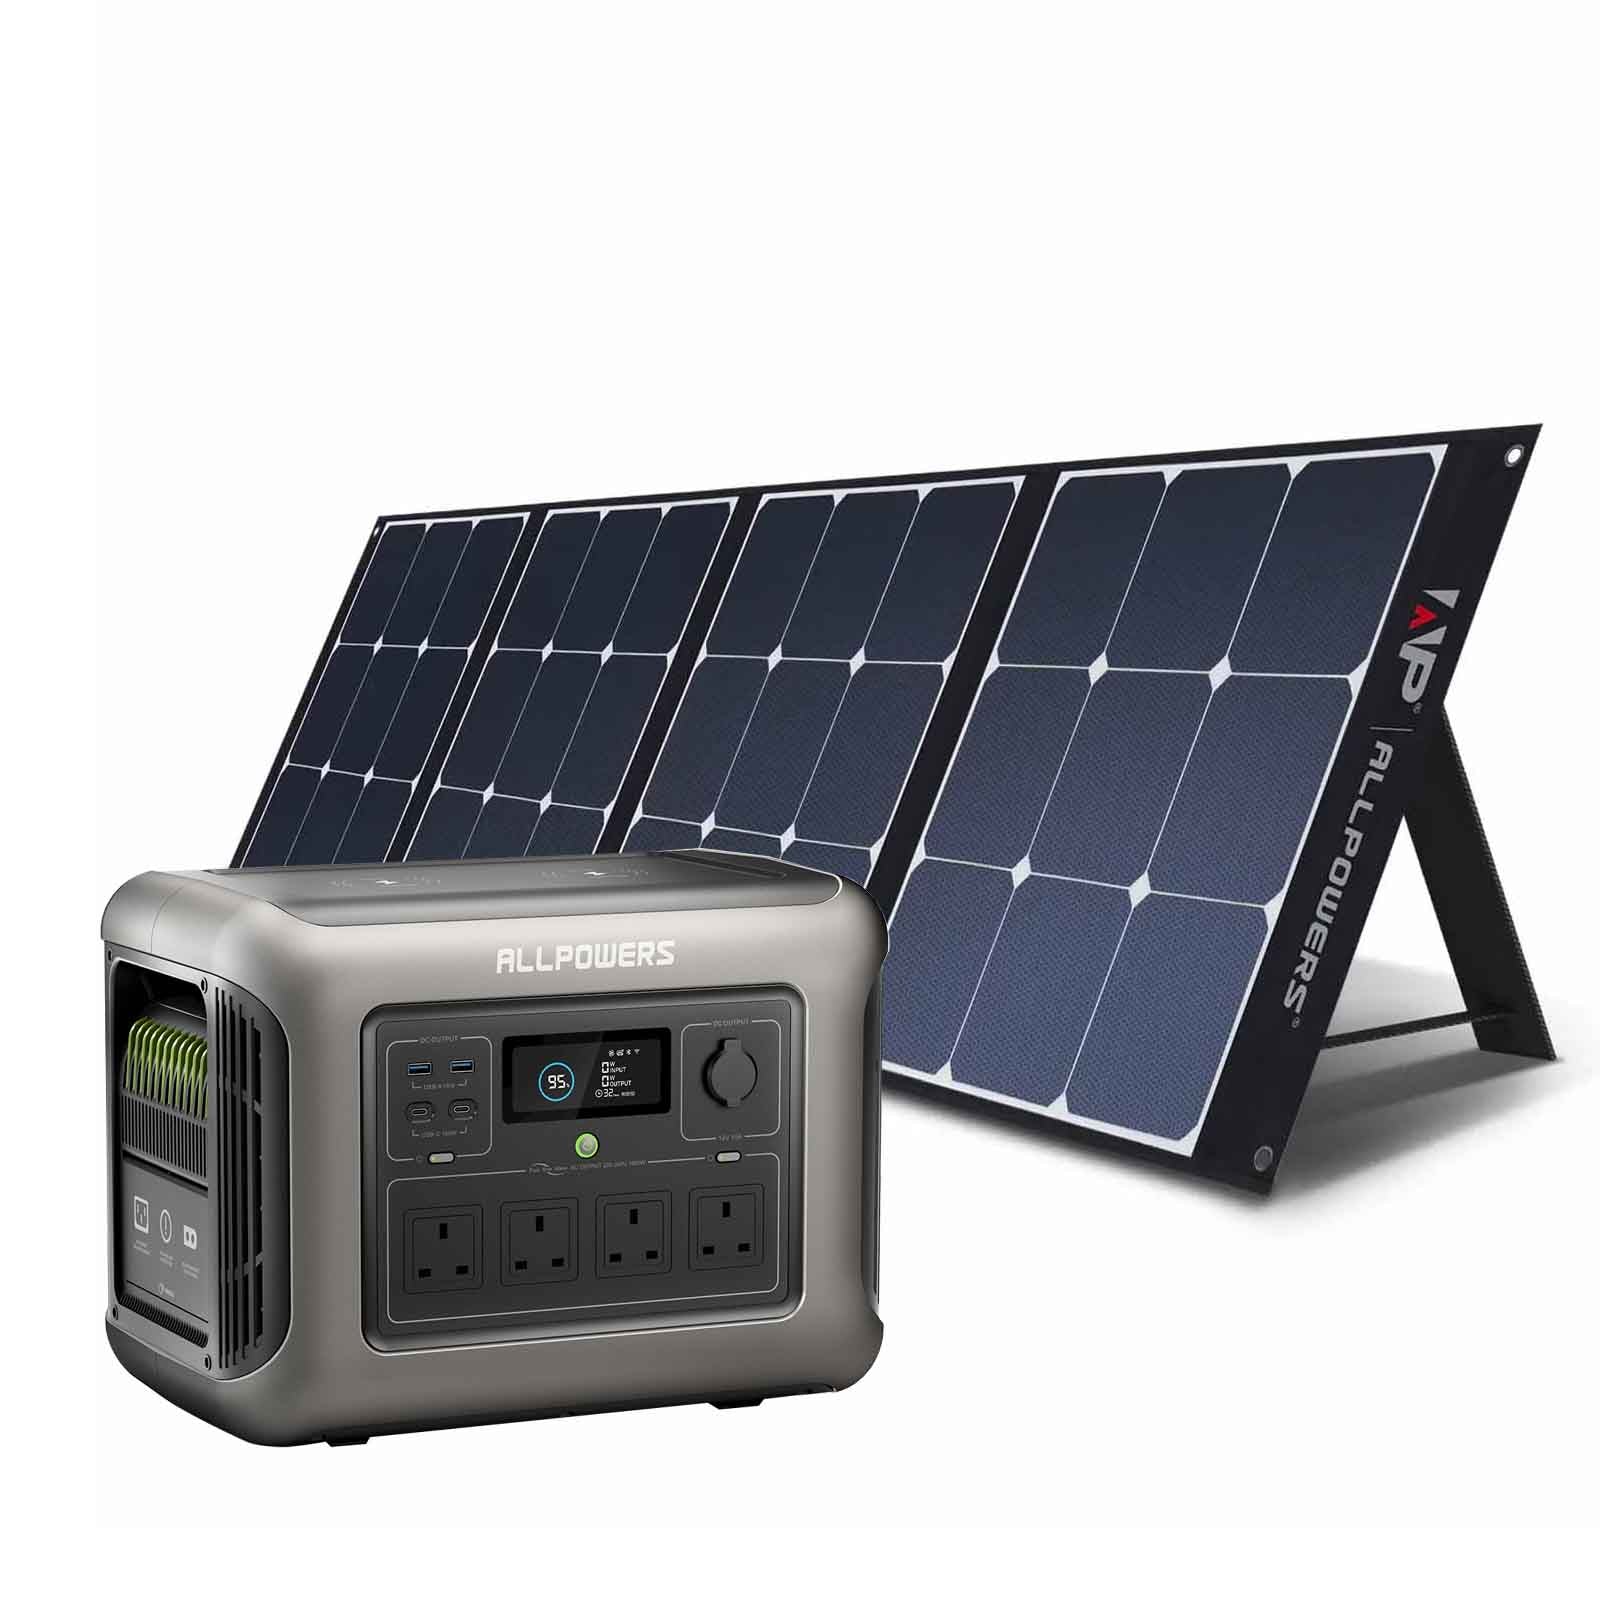 r1500-1-sp035-solar-generator-kit.jpg